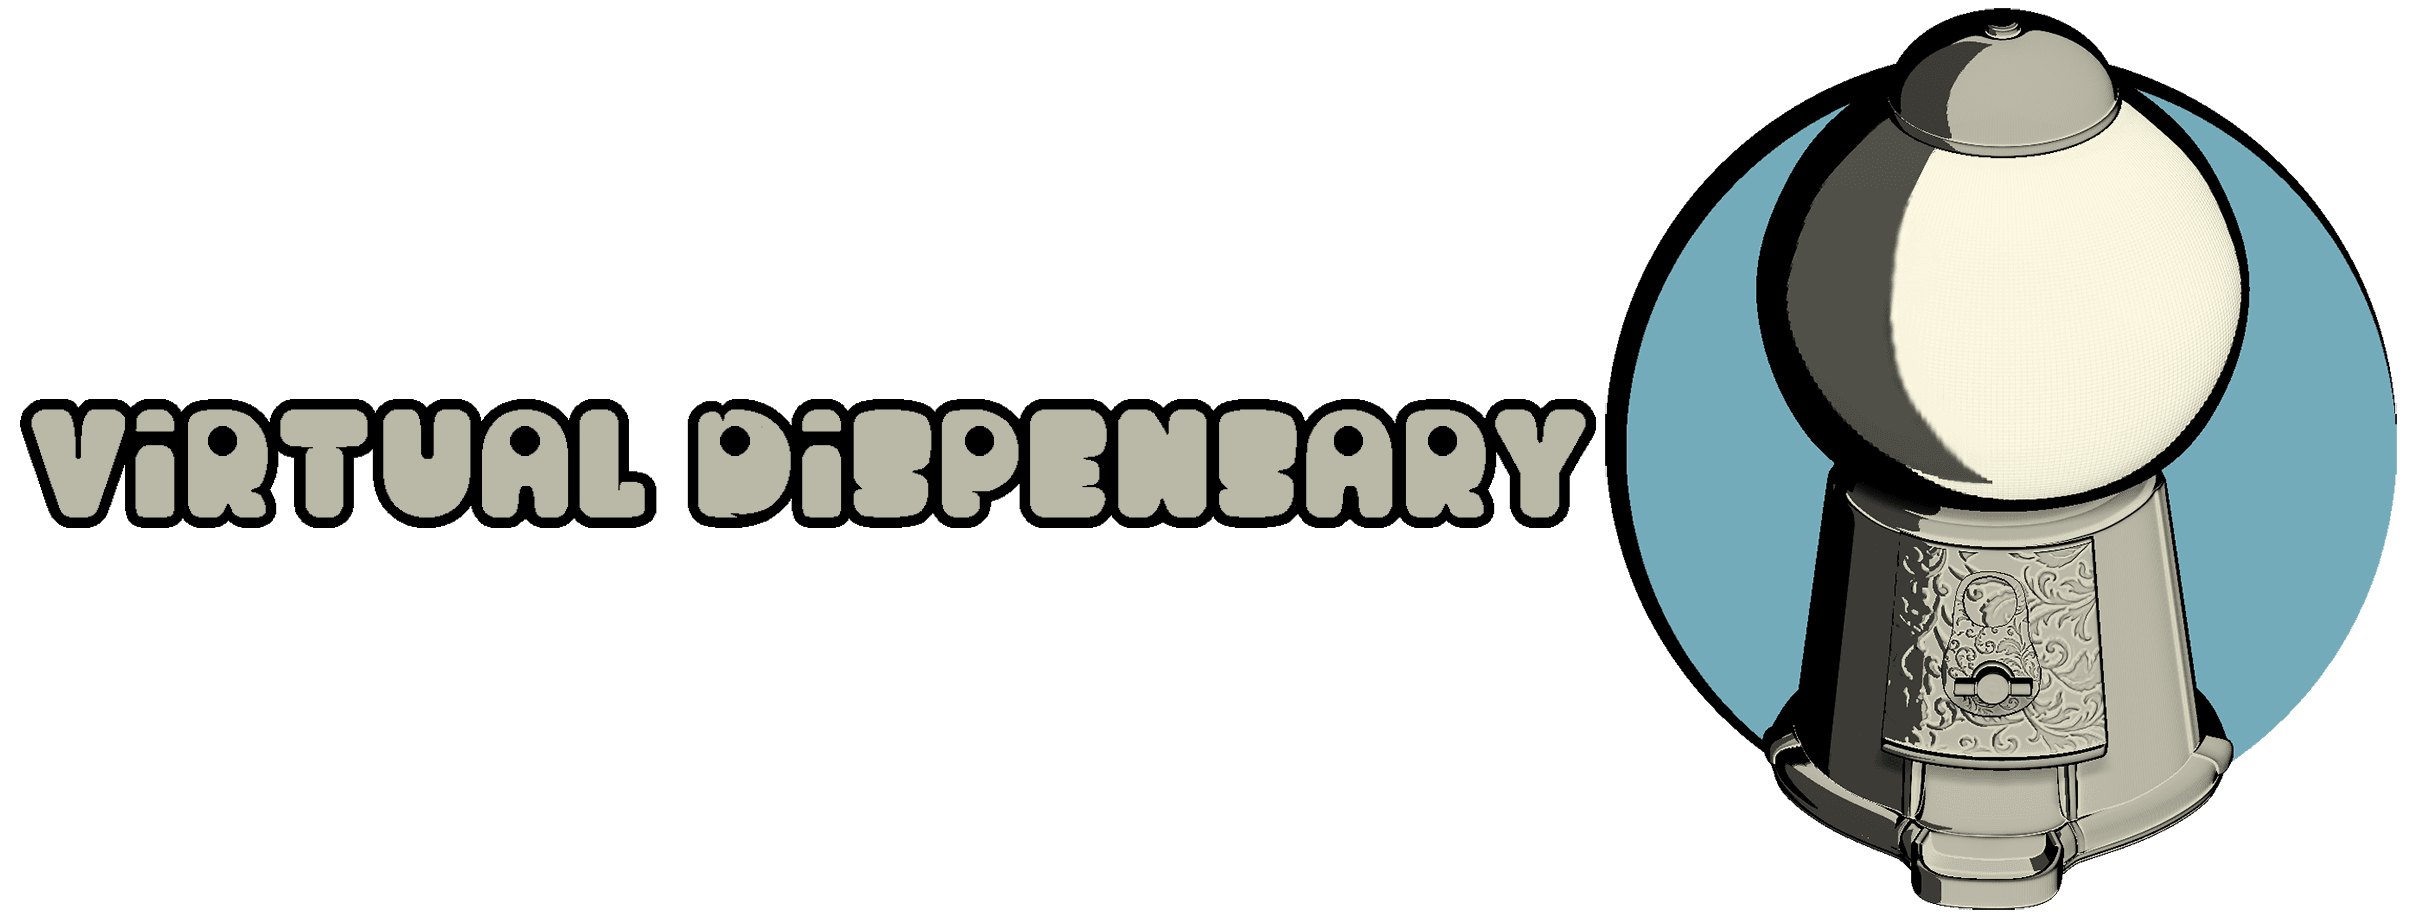 VirtualDispensary banner